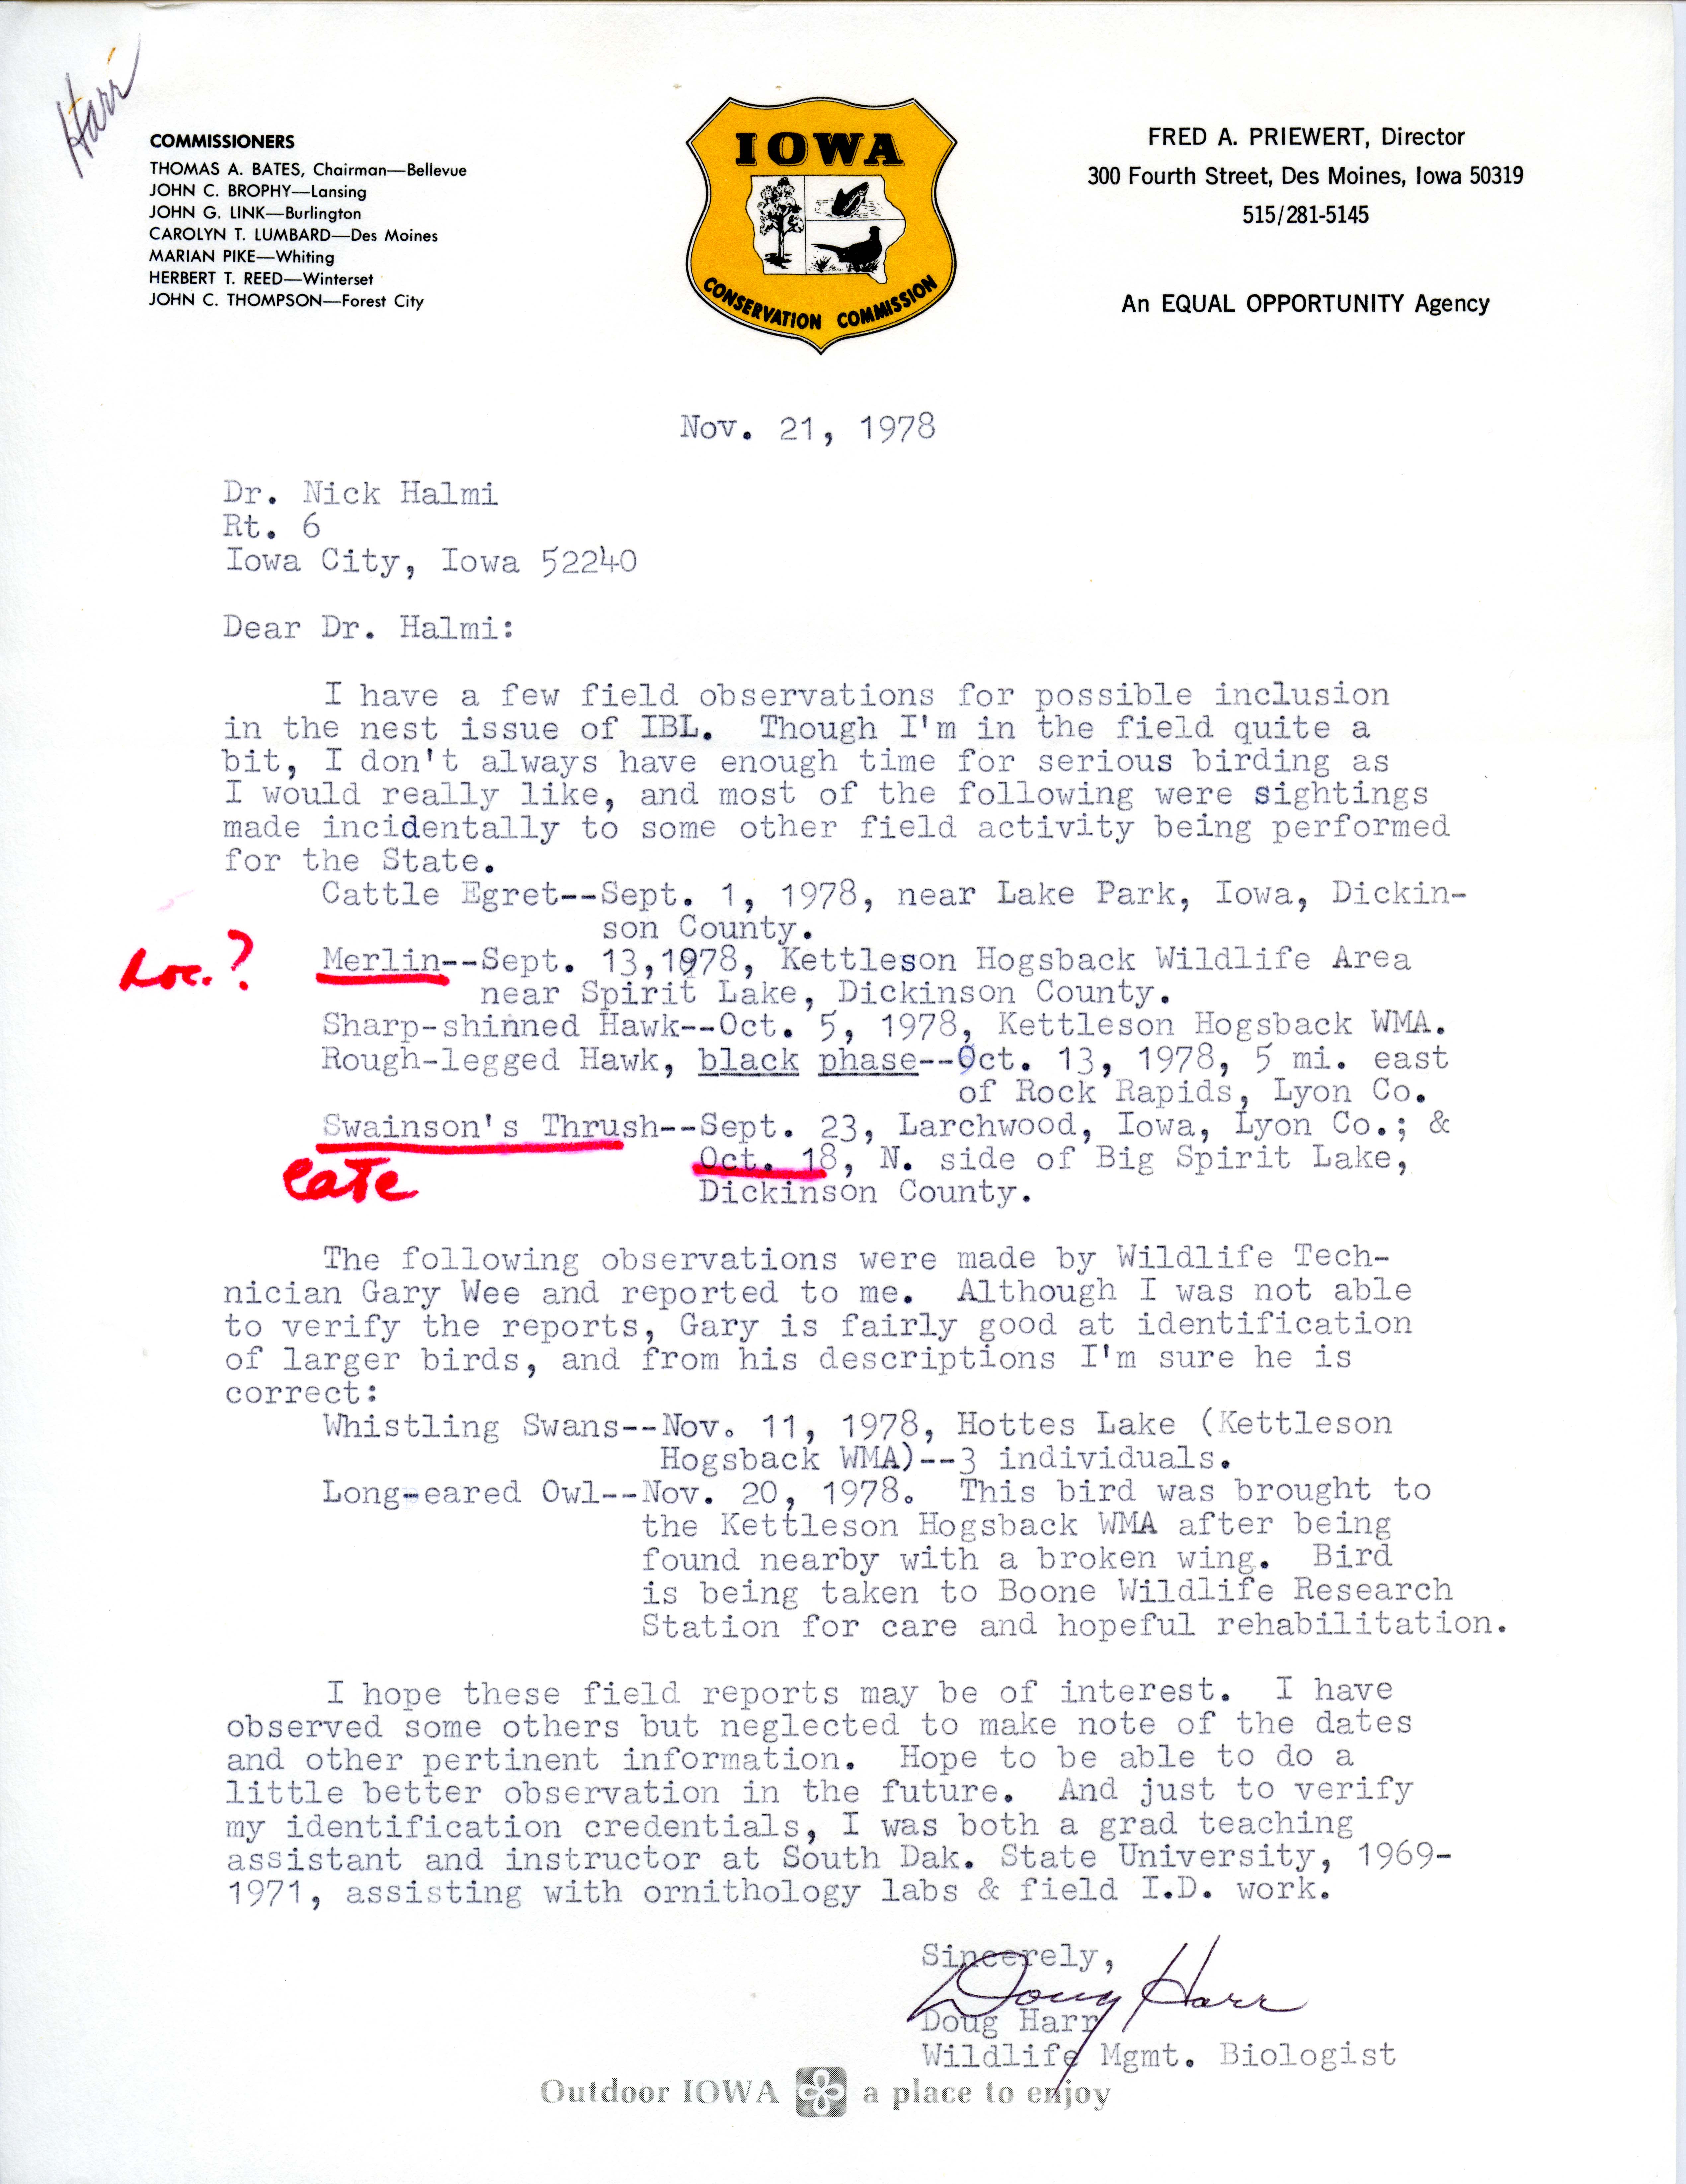 Douglas H. Pratt letter to Nicholas S. Halmi regarding bird sightings, November 21, 1978